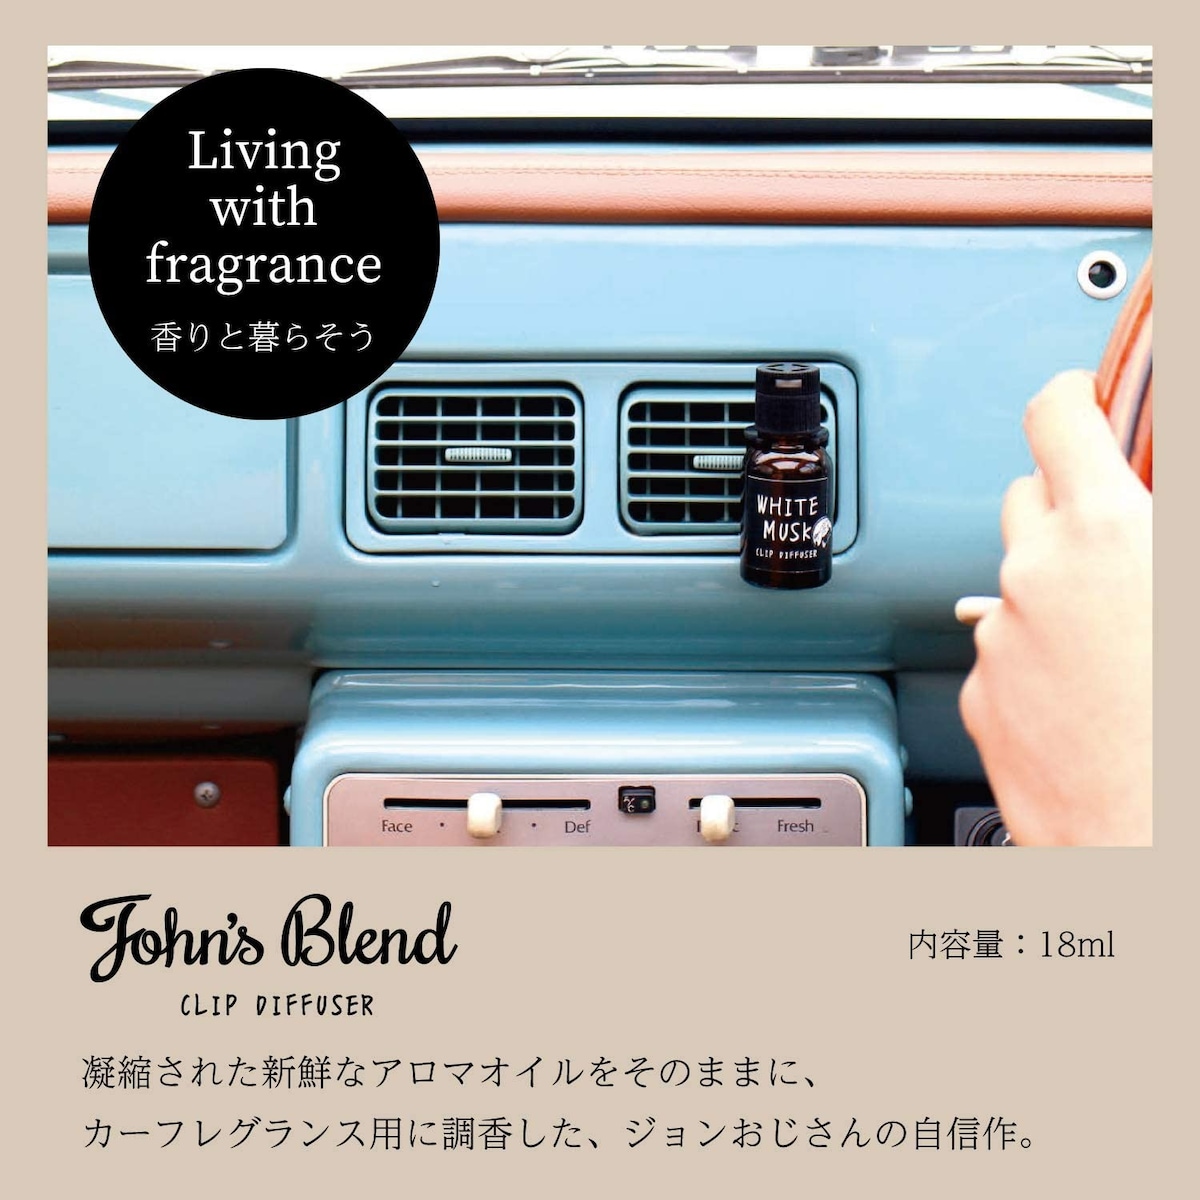  John's Blend 車用芳香剤 クリップディフューザー ホワイトムスク画像2 